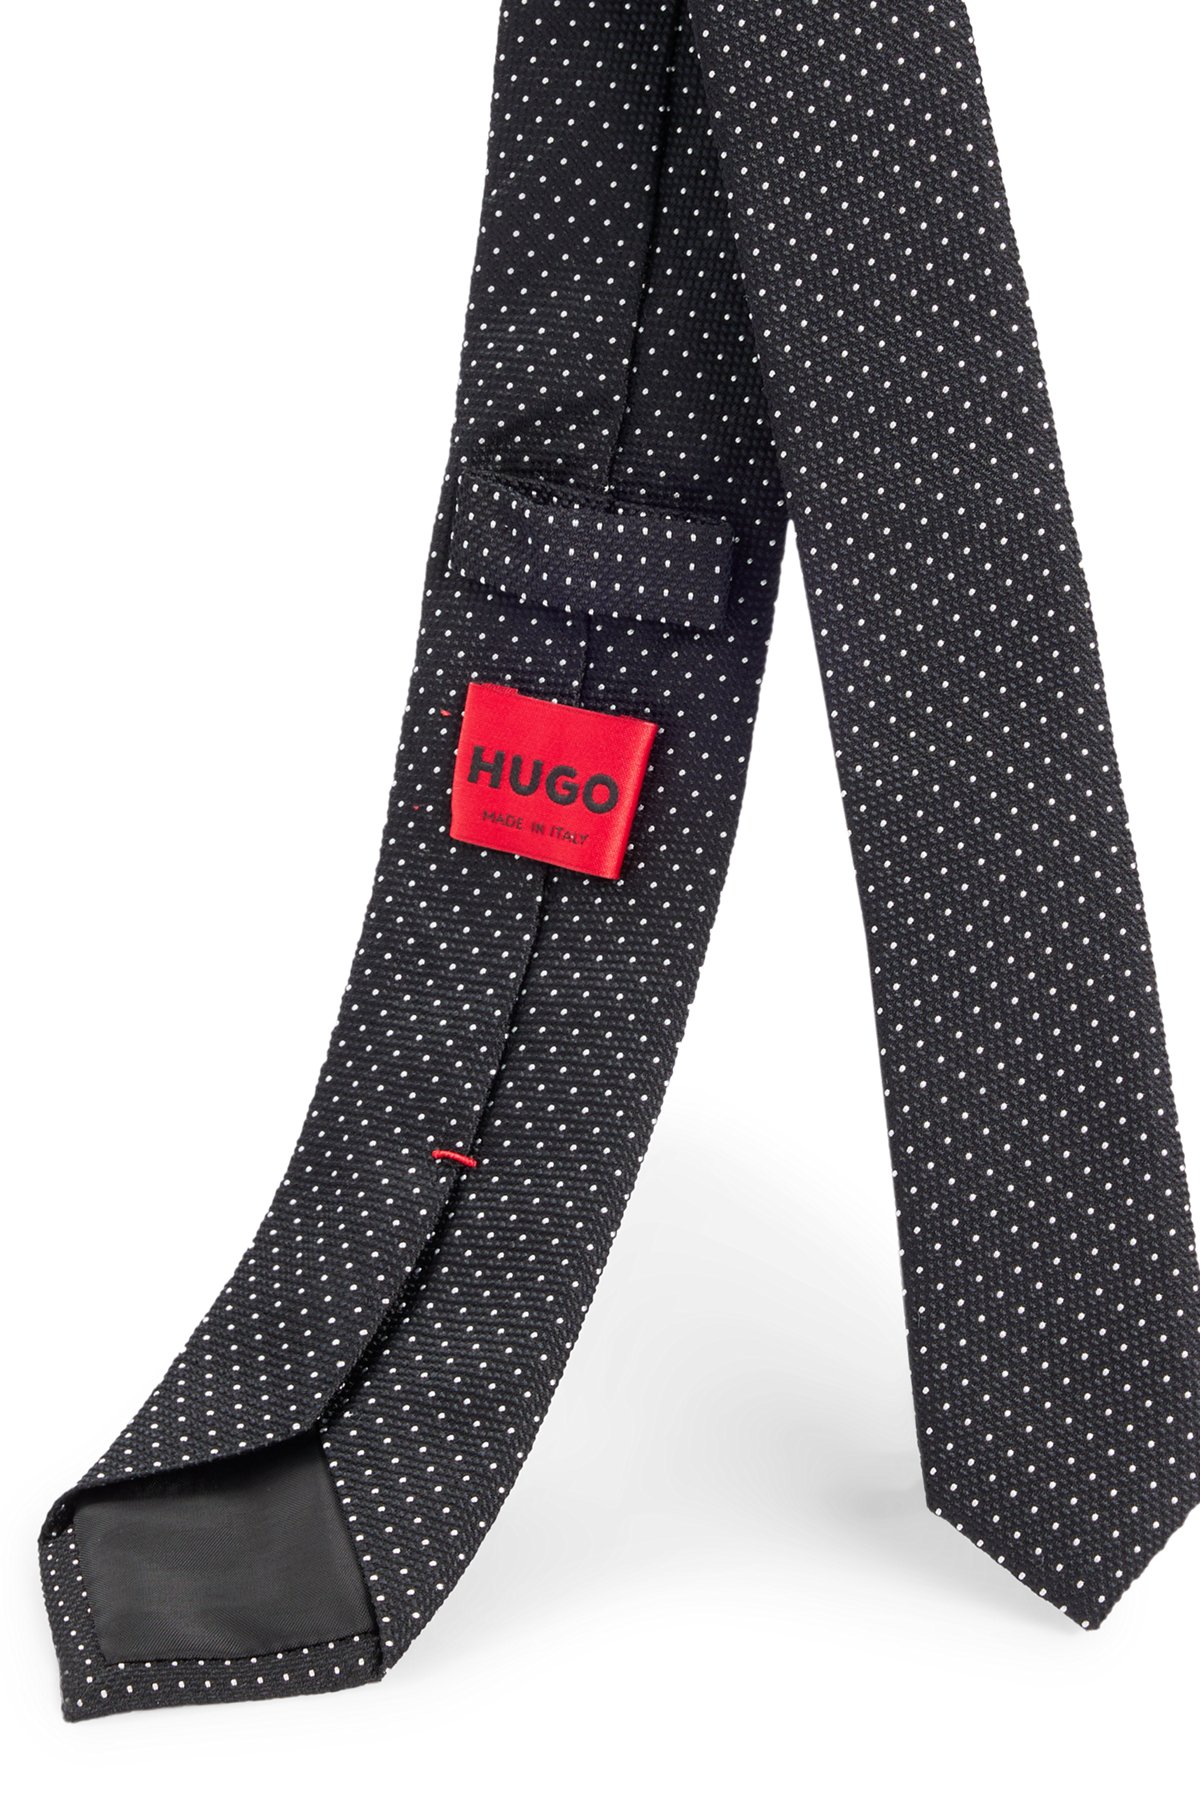 HUGO - Krawatte aus reiner Seide mit Jacquard-Muster